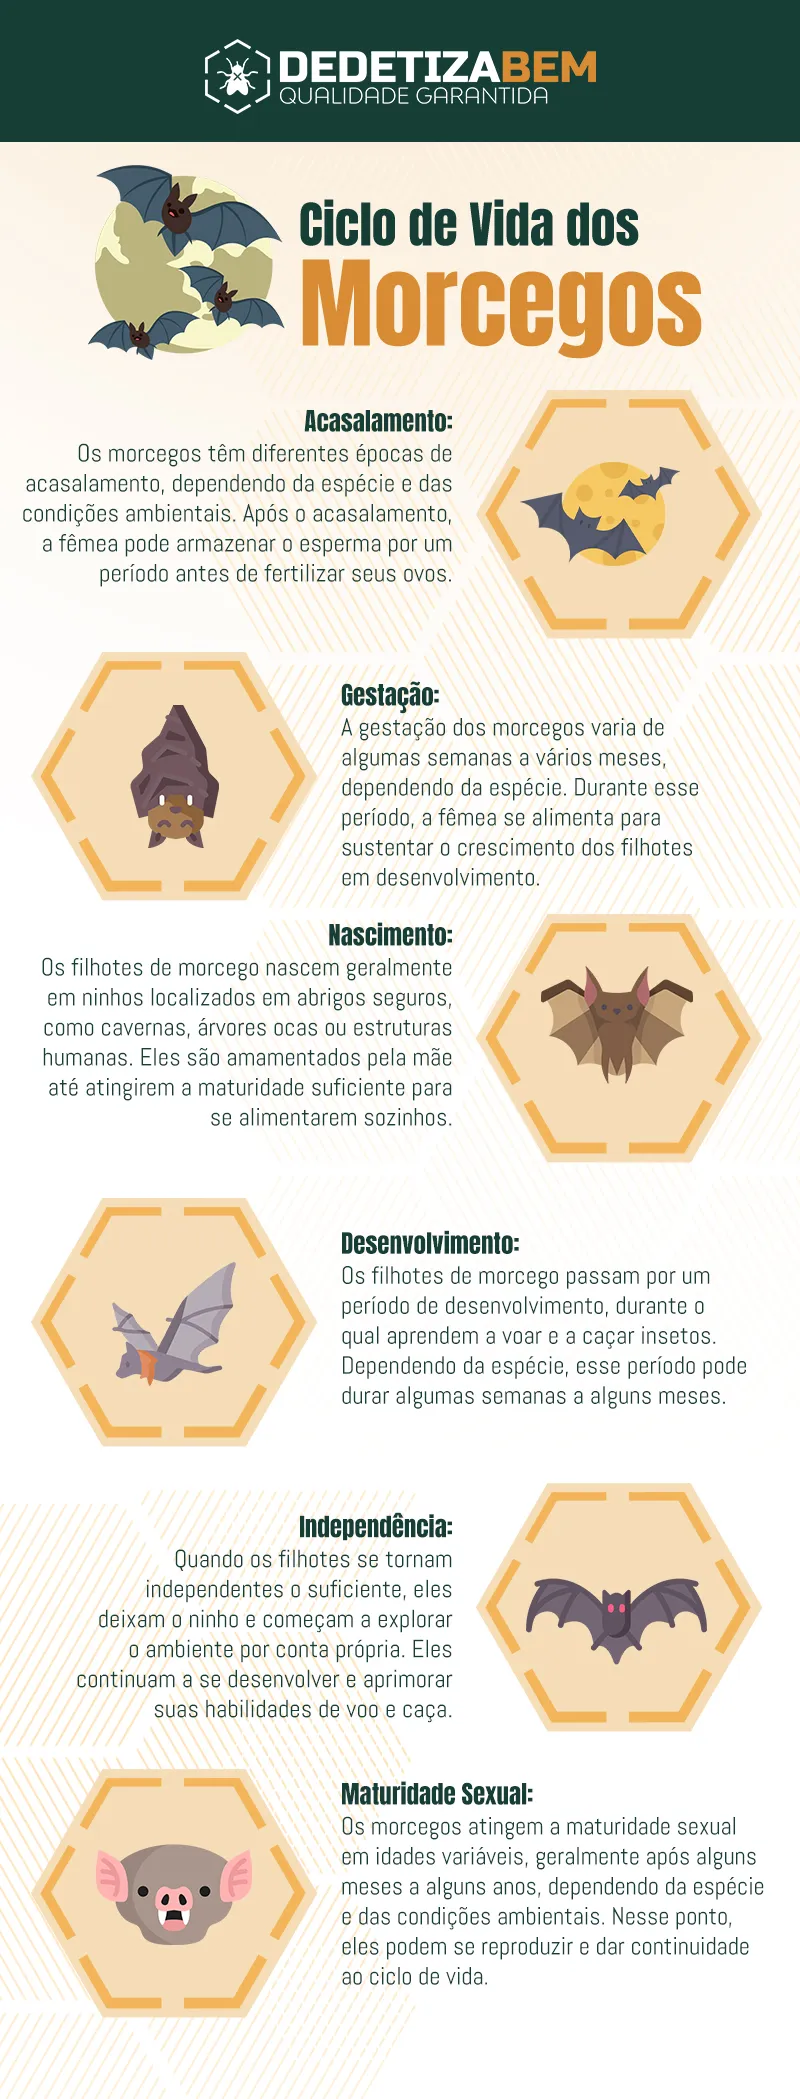 Ciclo de Vida dos Morcegos: Ciclo Reprodutivo, Riscos e Métodos de Controle